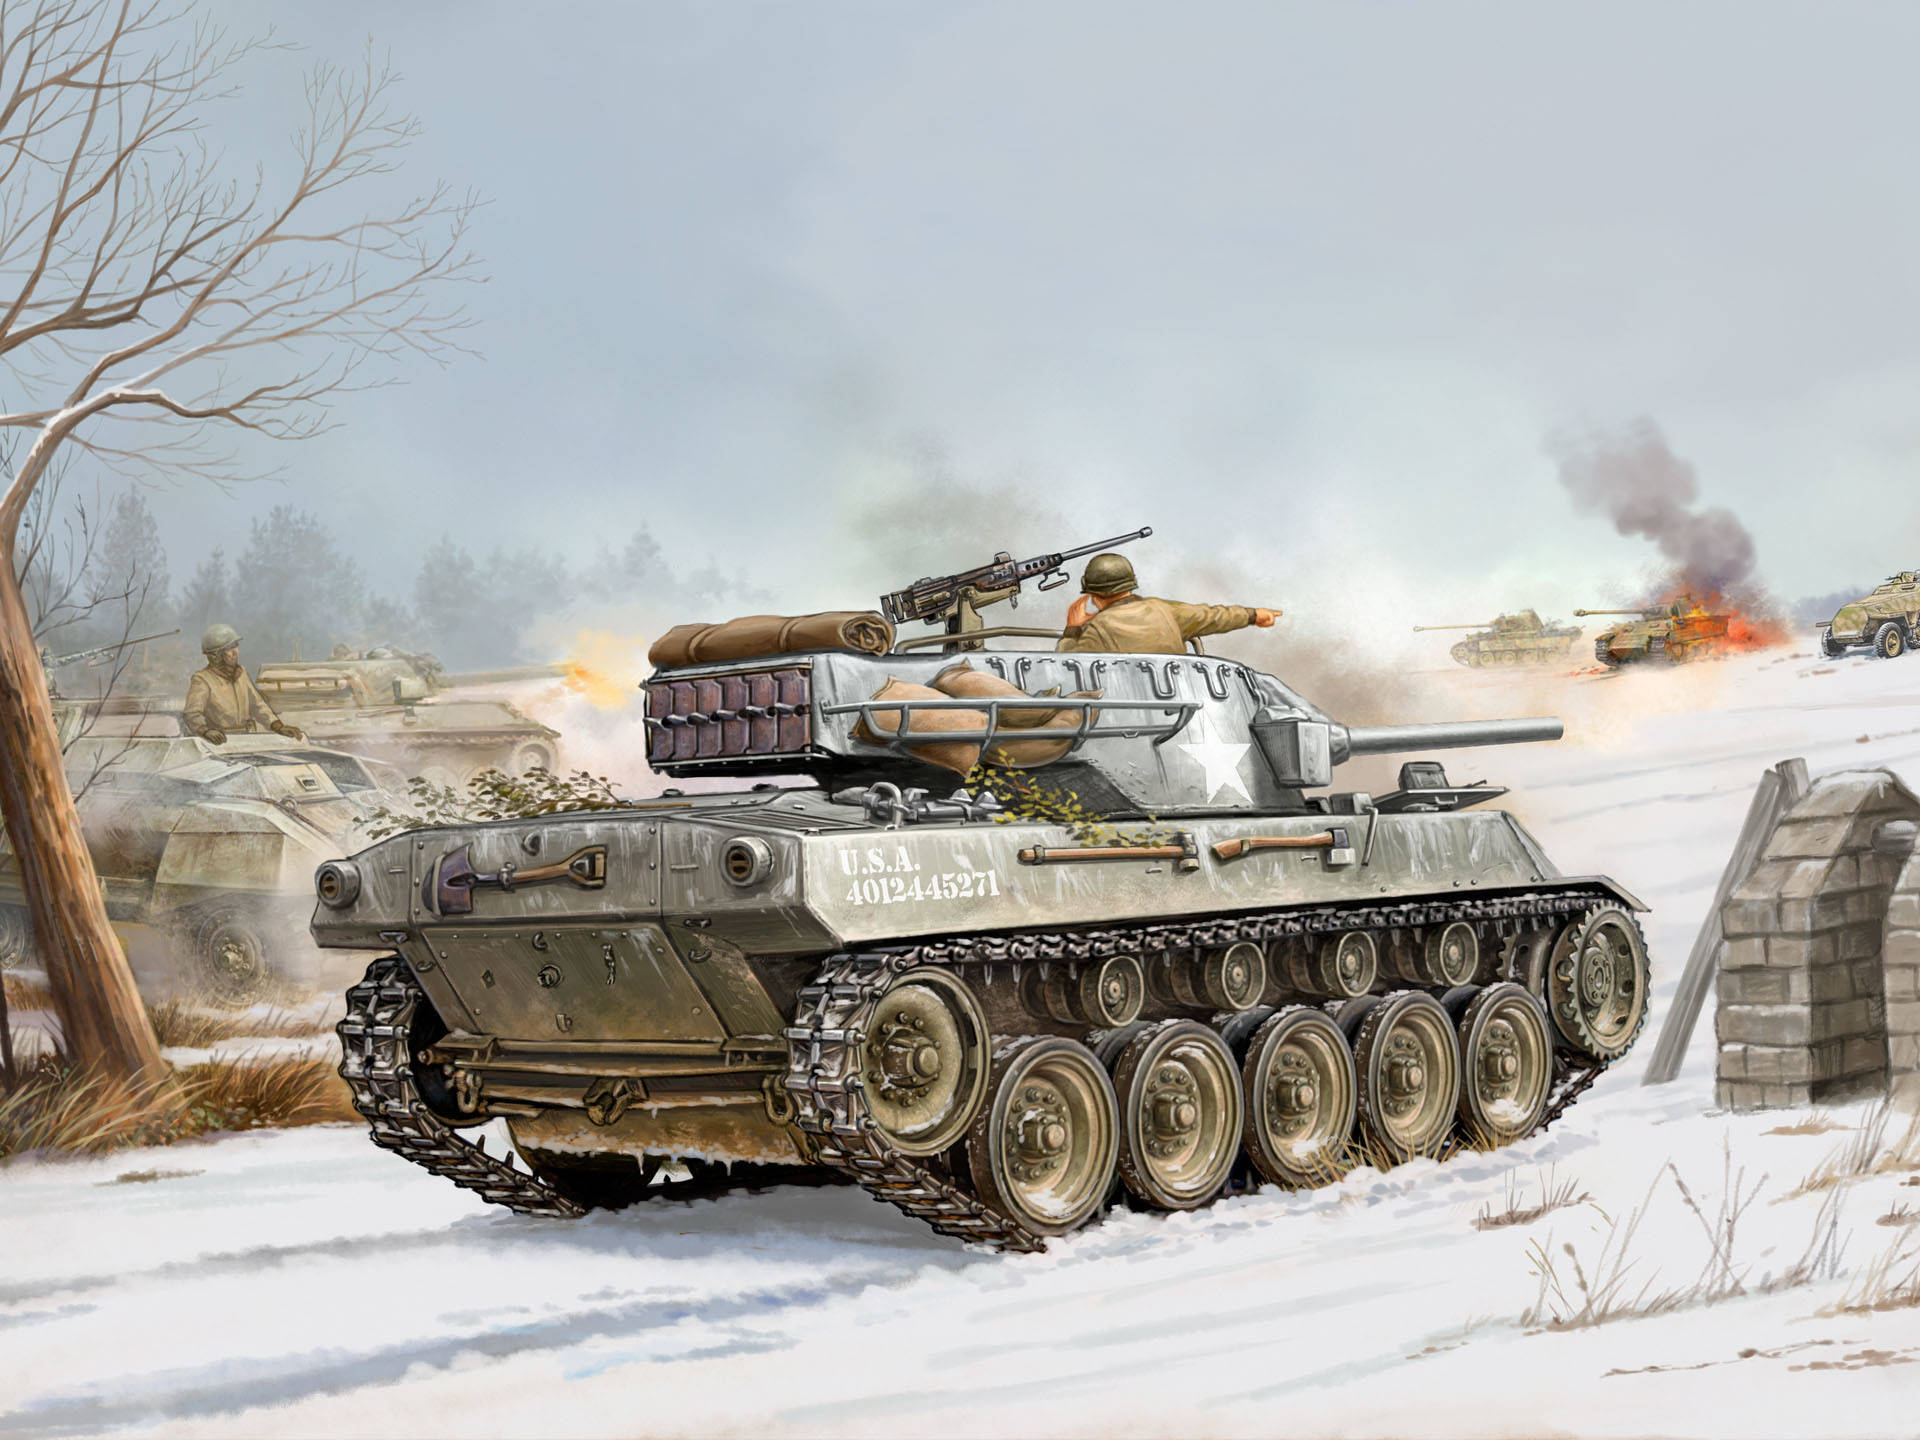 Military Tanks In Snow Wallpaper